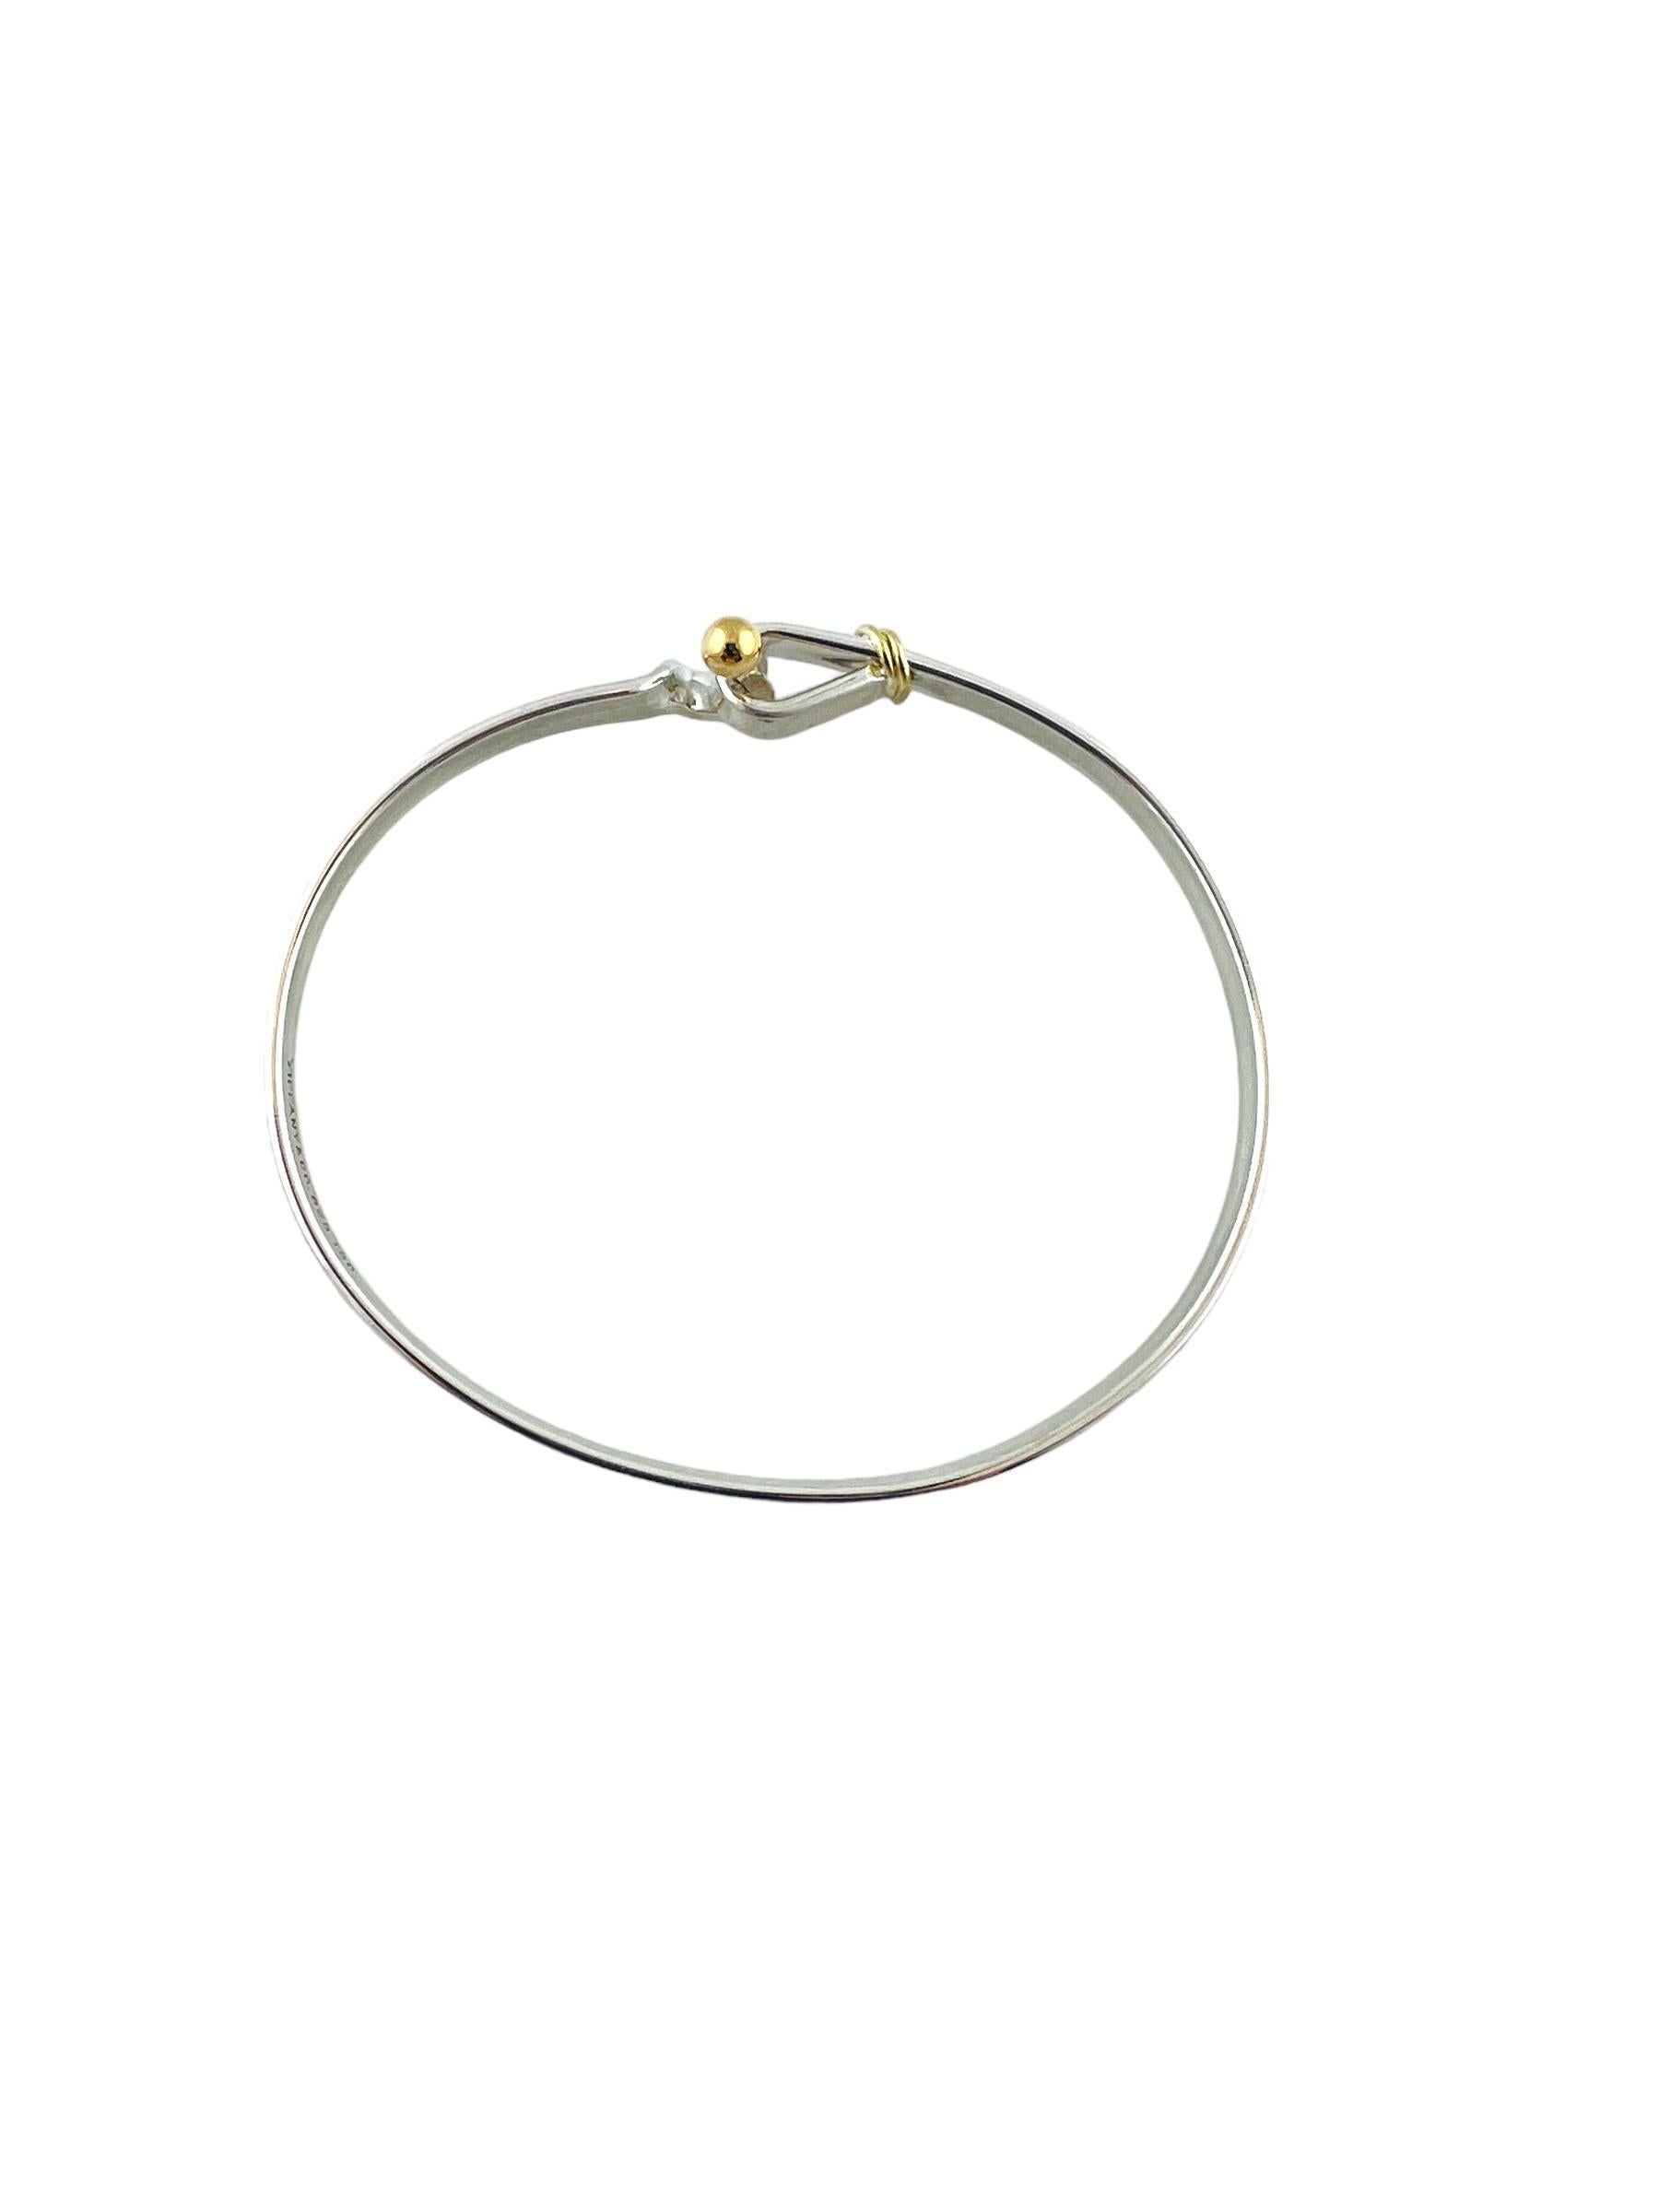 Tiffany & Co Sterling Silver 18K Yellow Gold Hook and Eye Bangle Bracelet #15462 1